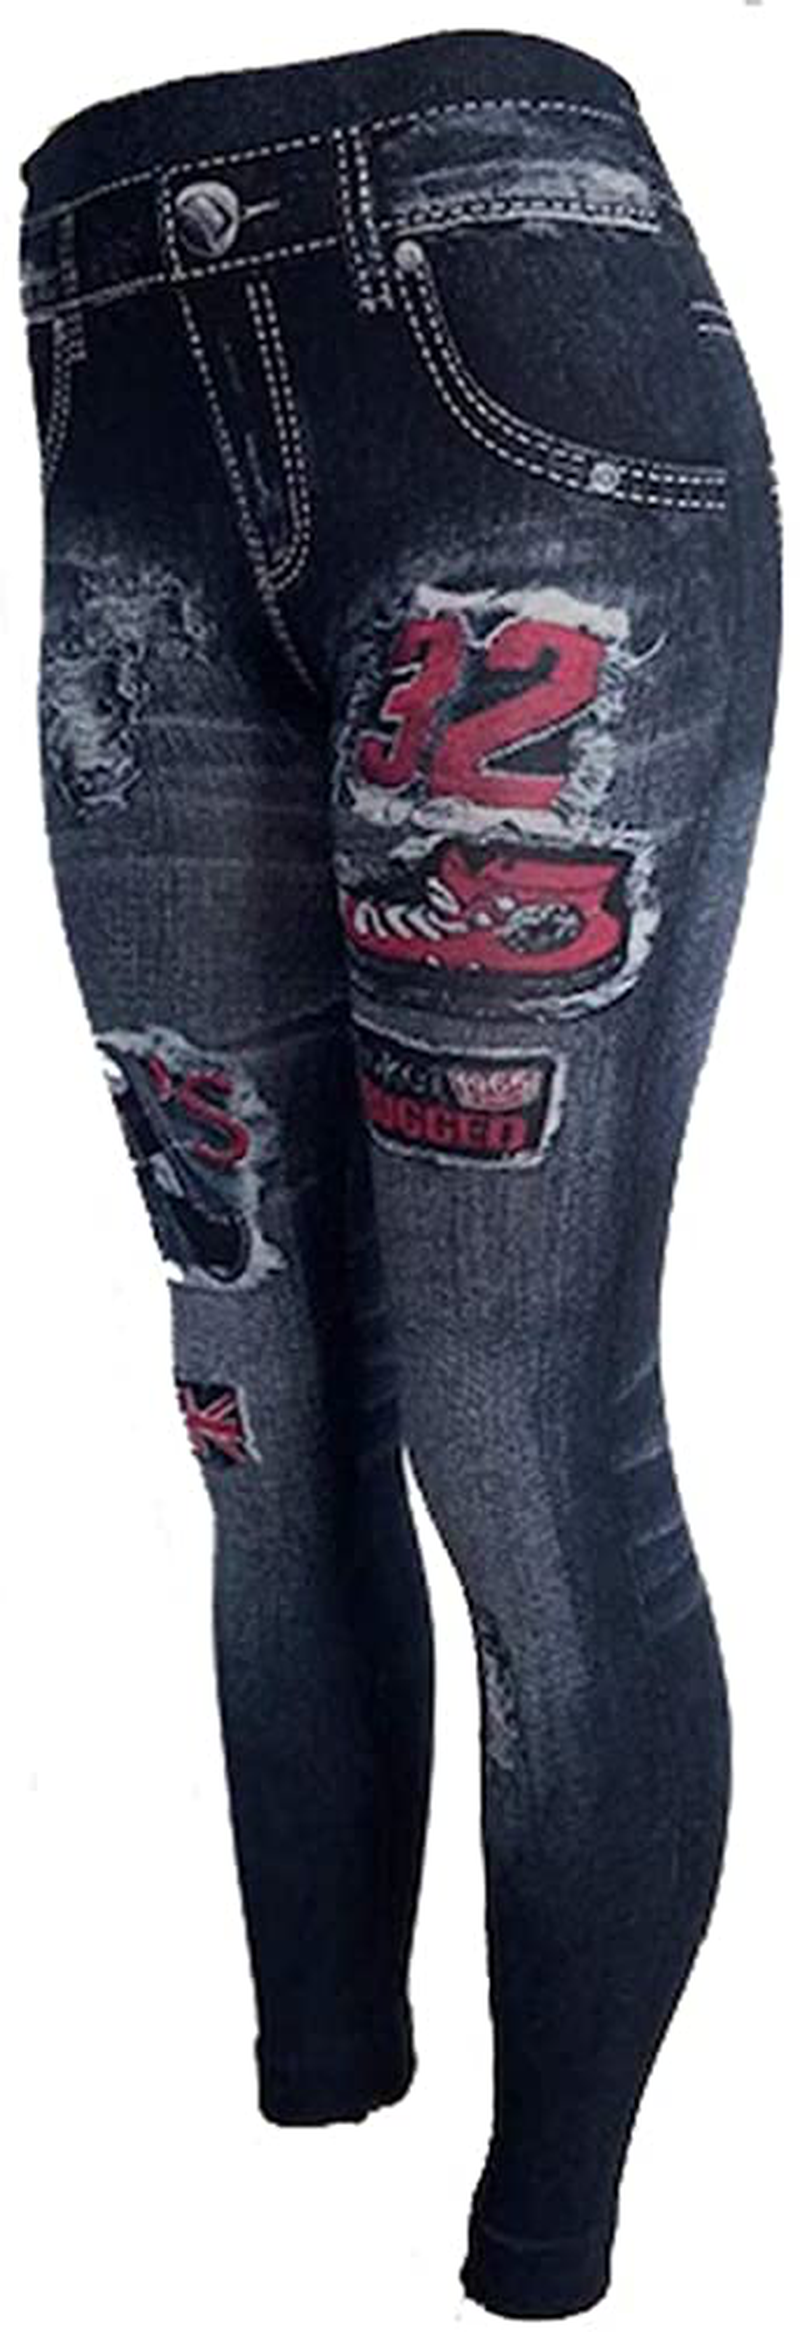 CLOYA Women's Denim Print Seamless Full Leggings for All Seasons - One Size Fits Small and Medium